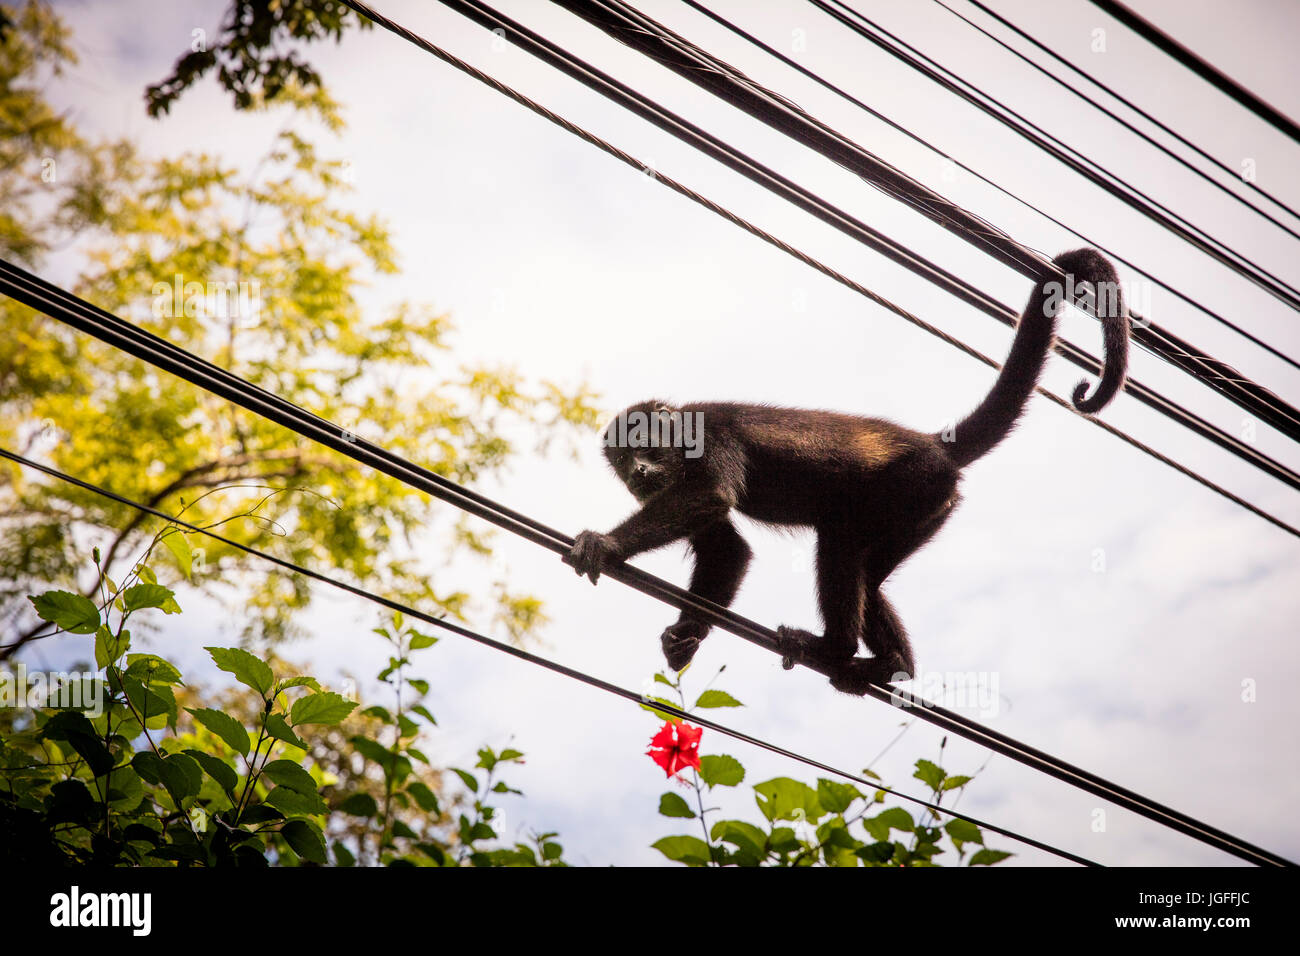 Monkey climbing on wires Stock Photo